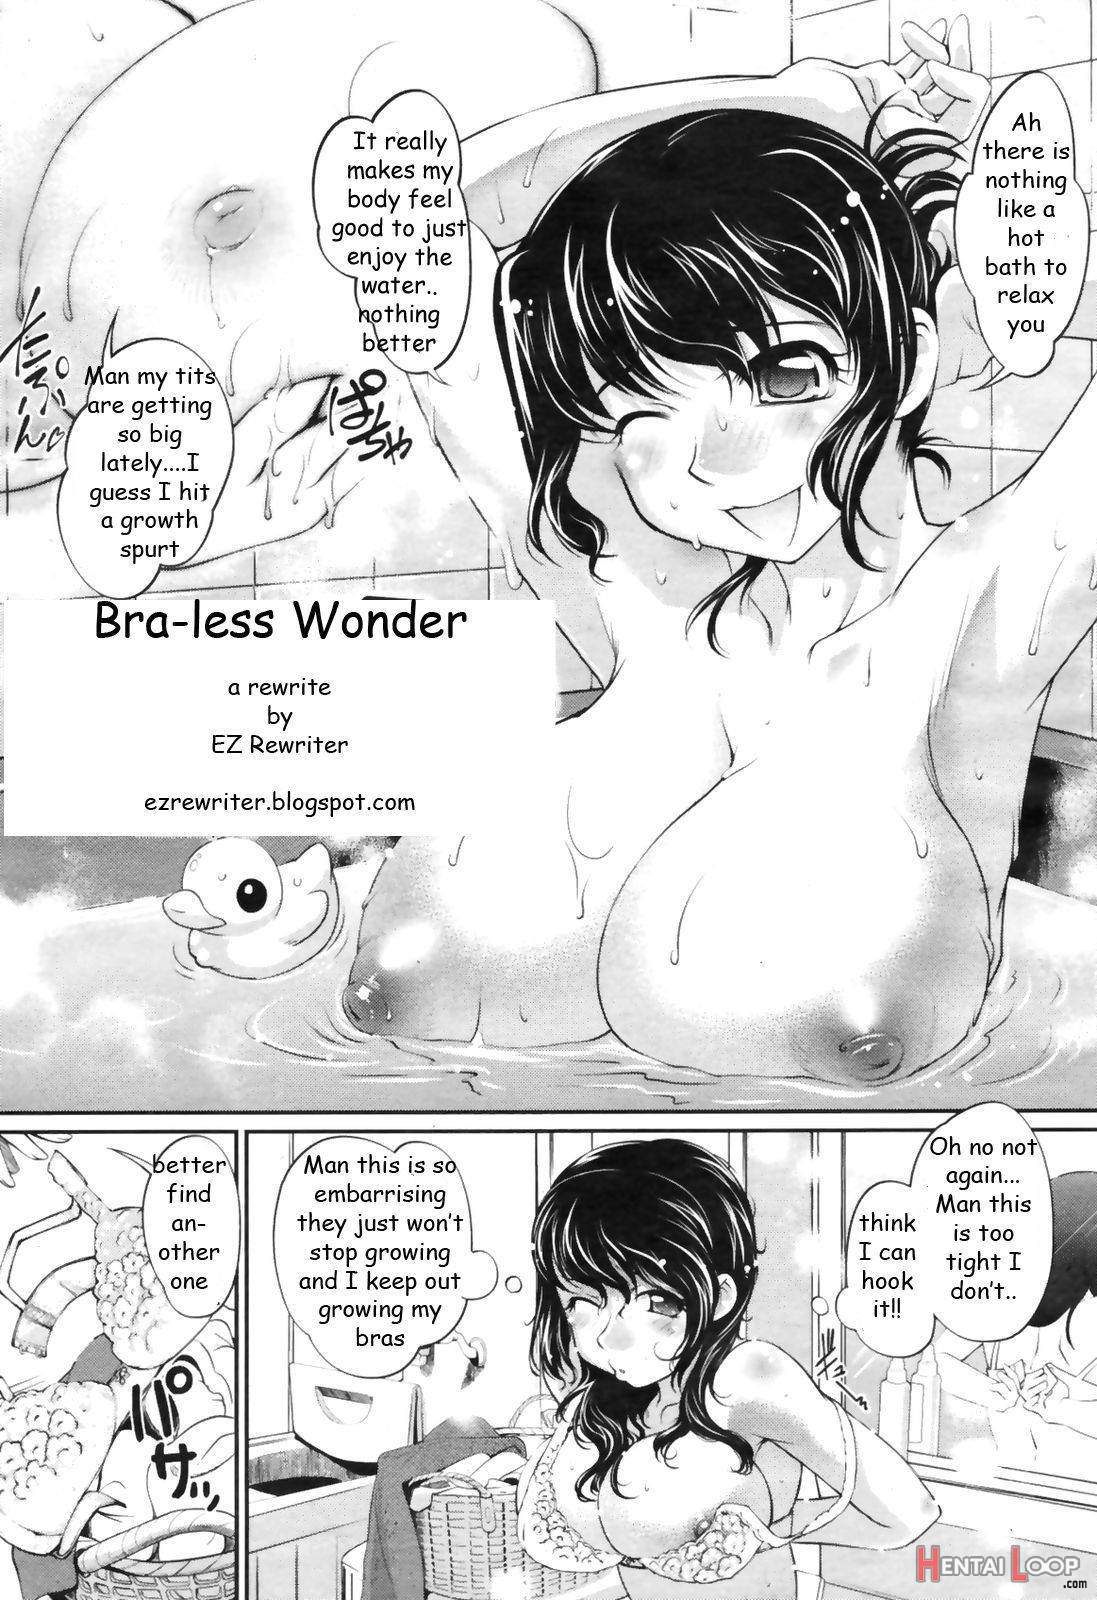 Bra-less Wonder page 1